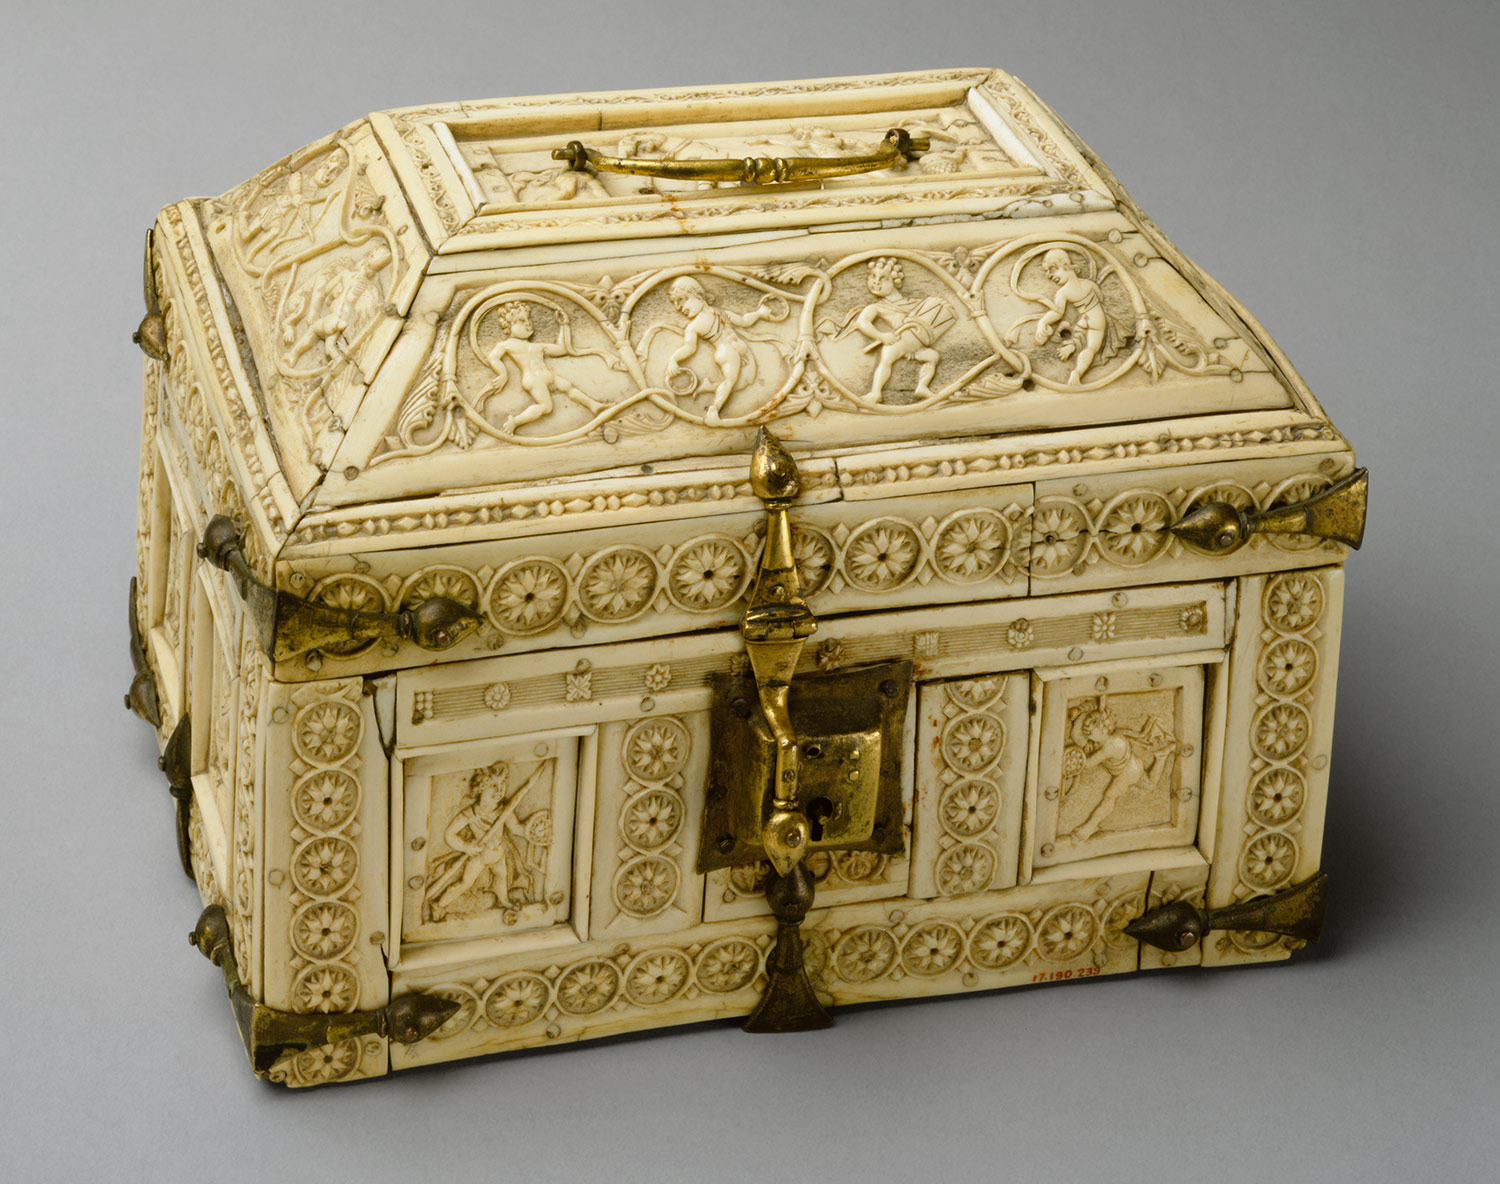 Byzantine Empire Artifacts